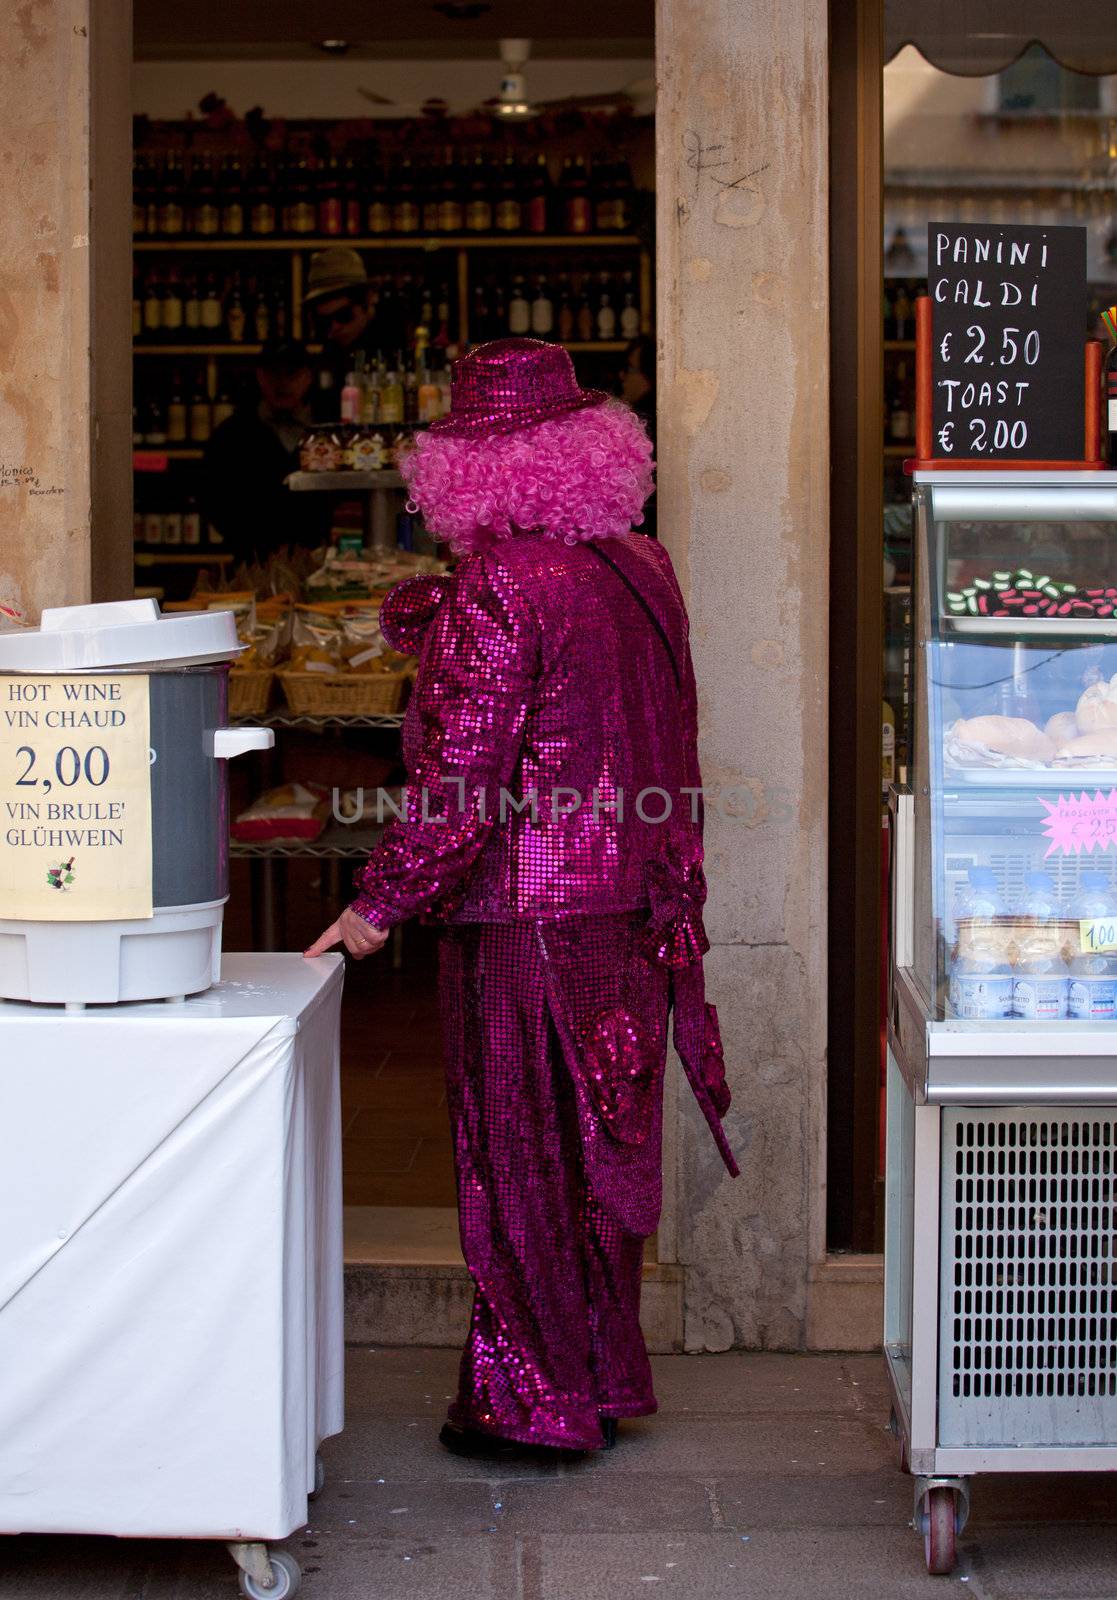 Clown, Venice carnival by bepsimage